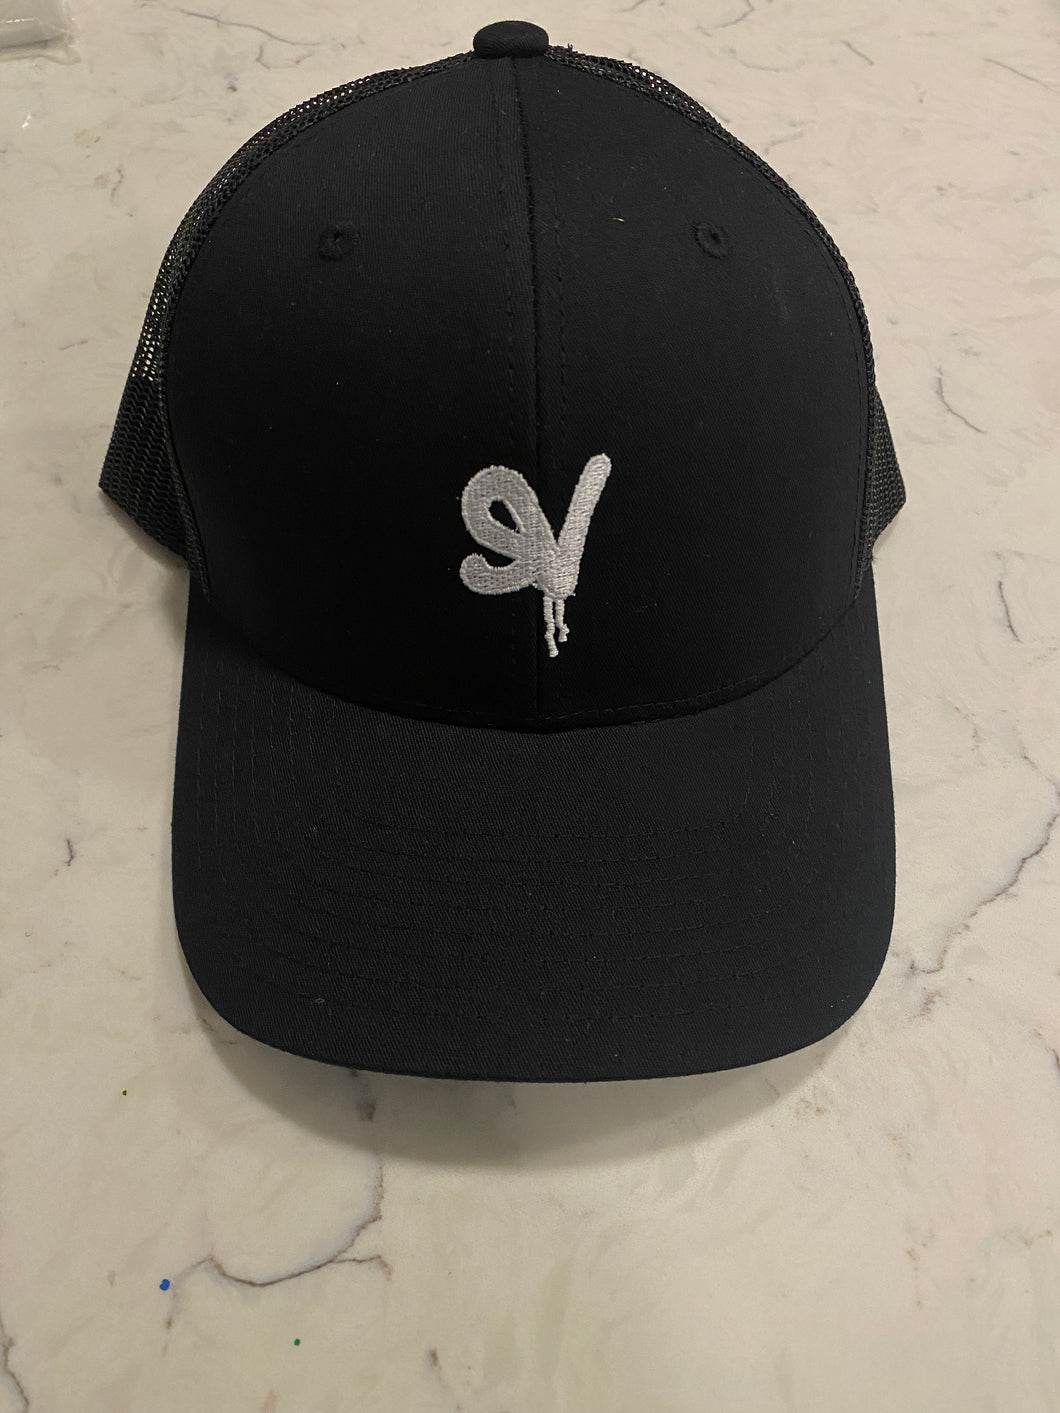 SV trucker hat